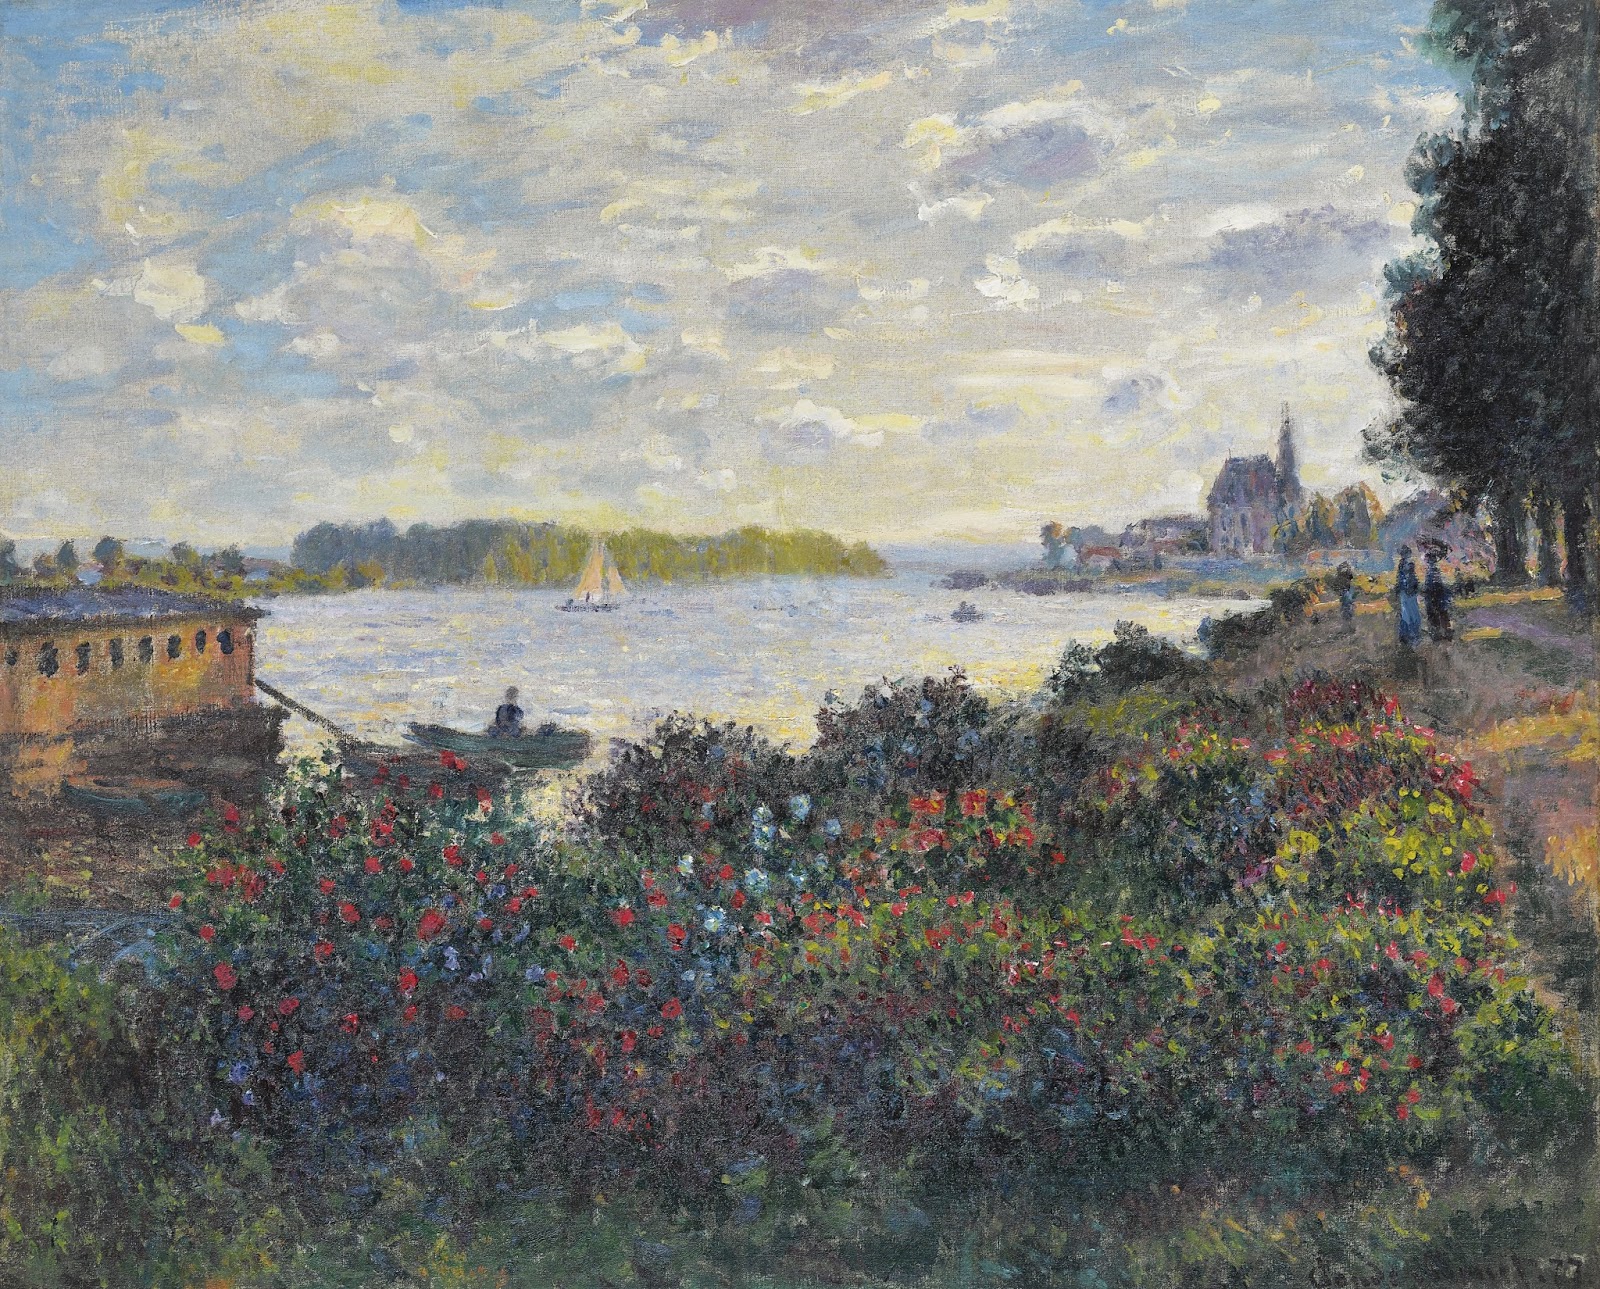 Claude+Monet-1840-1926 (864).jpg